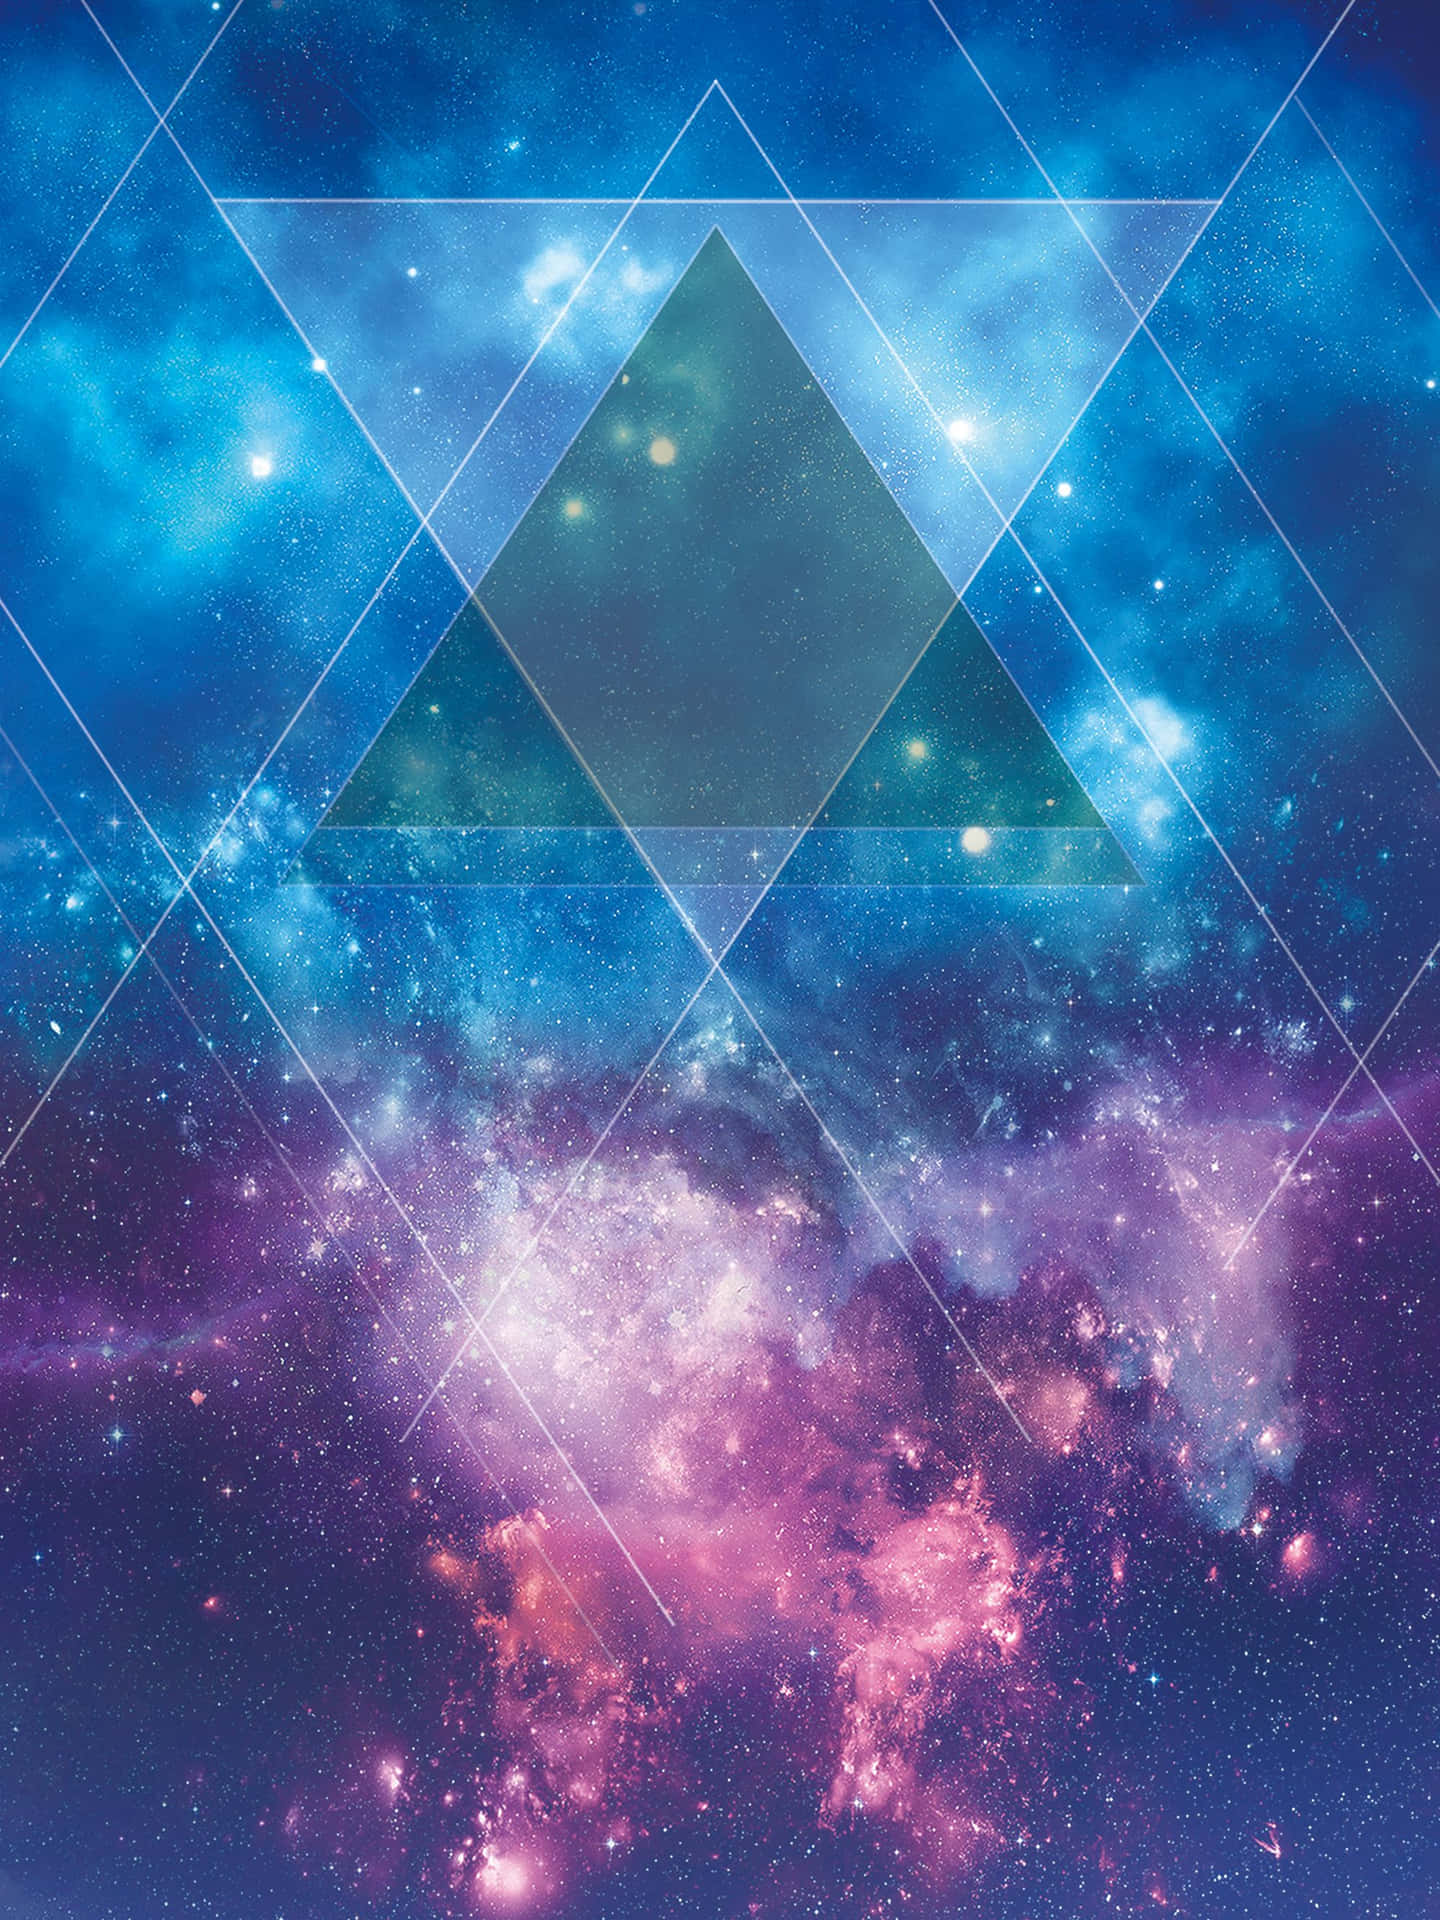 Stunning Galaxy Poster Wallpaper